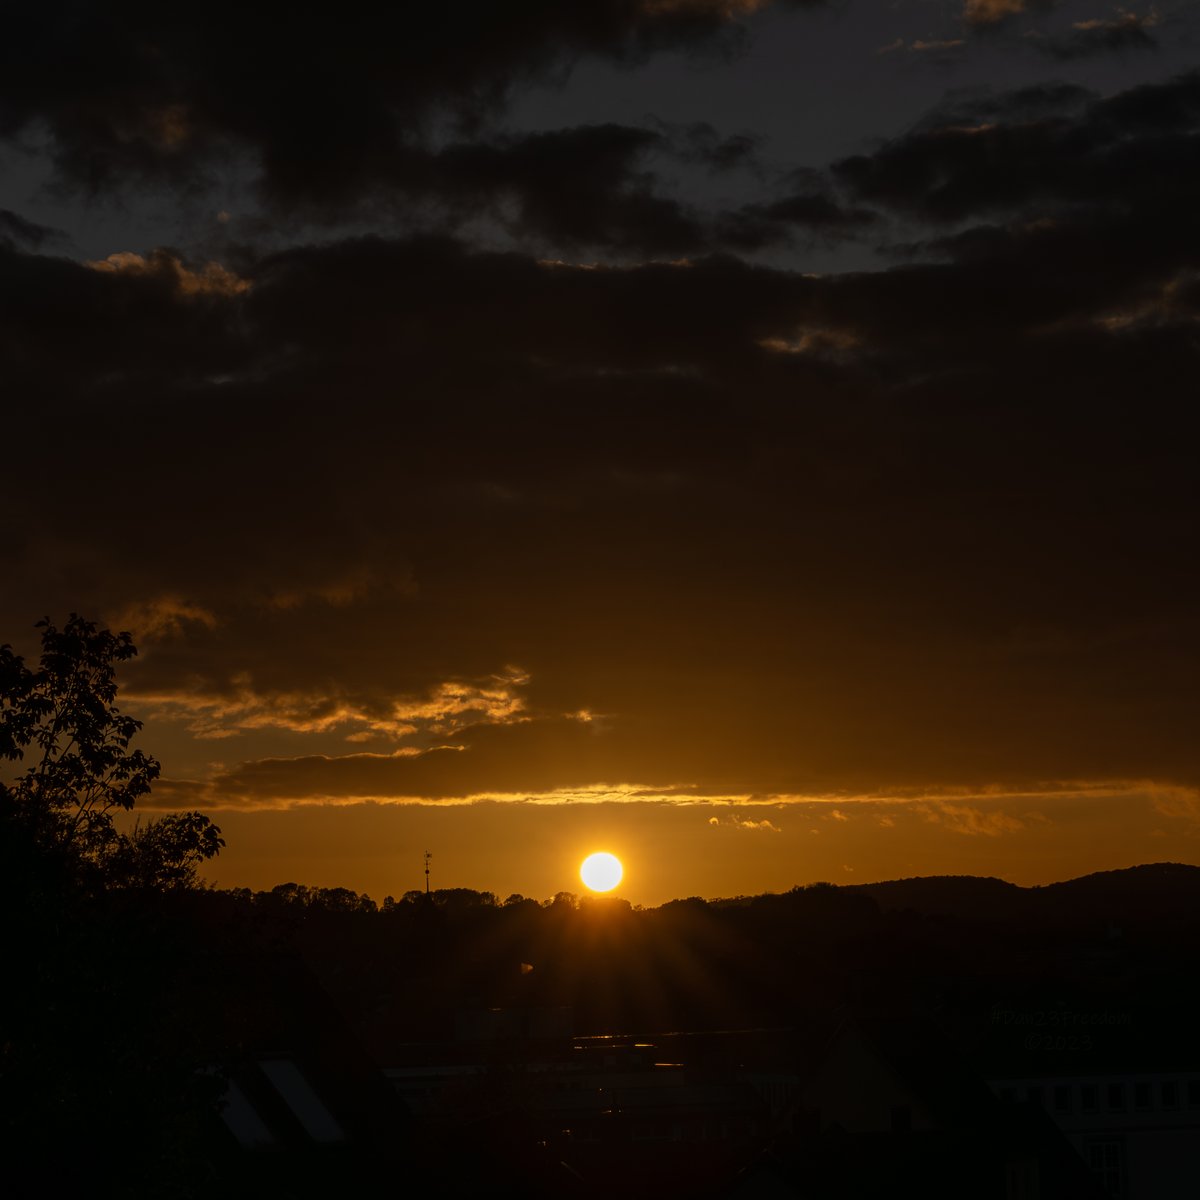 📷 1/1000 sec at f/19, ISO 100, 75 mm (28-75) #dan23freedom
#skyporn #sunset_lovers #sunsets_oftheworld #loves_skyandsunset #sunsets_captures #goldensky #sunsetshots #sunsetmadness